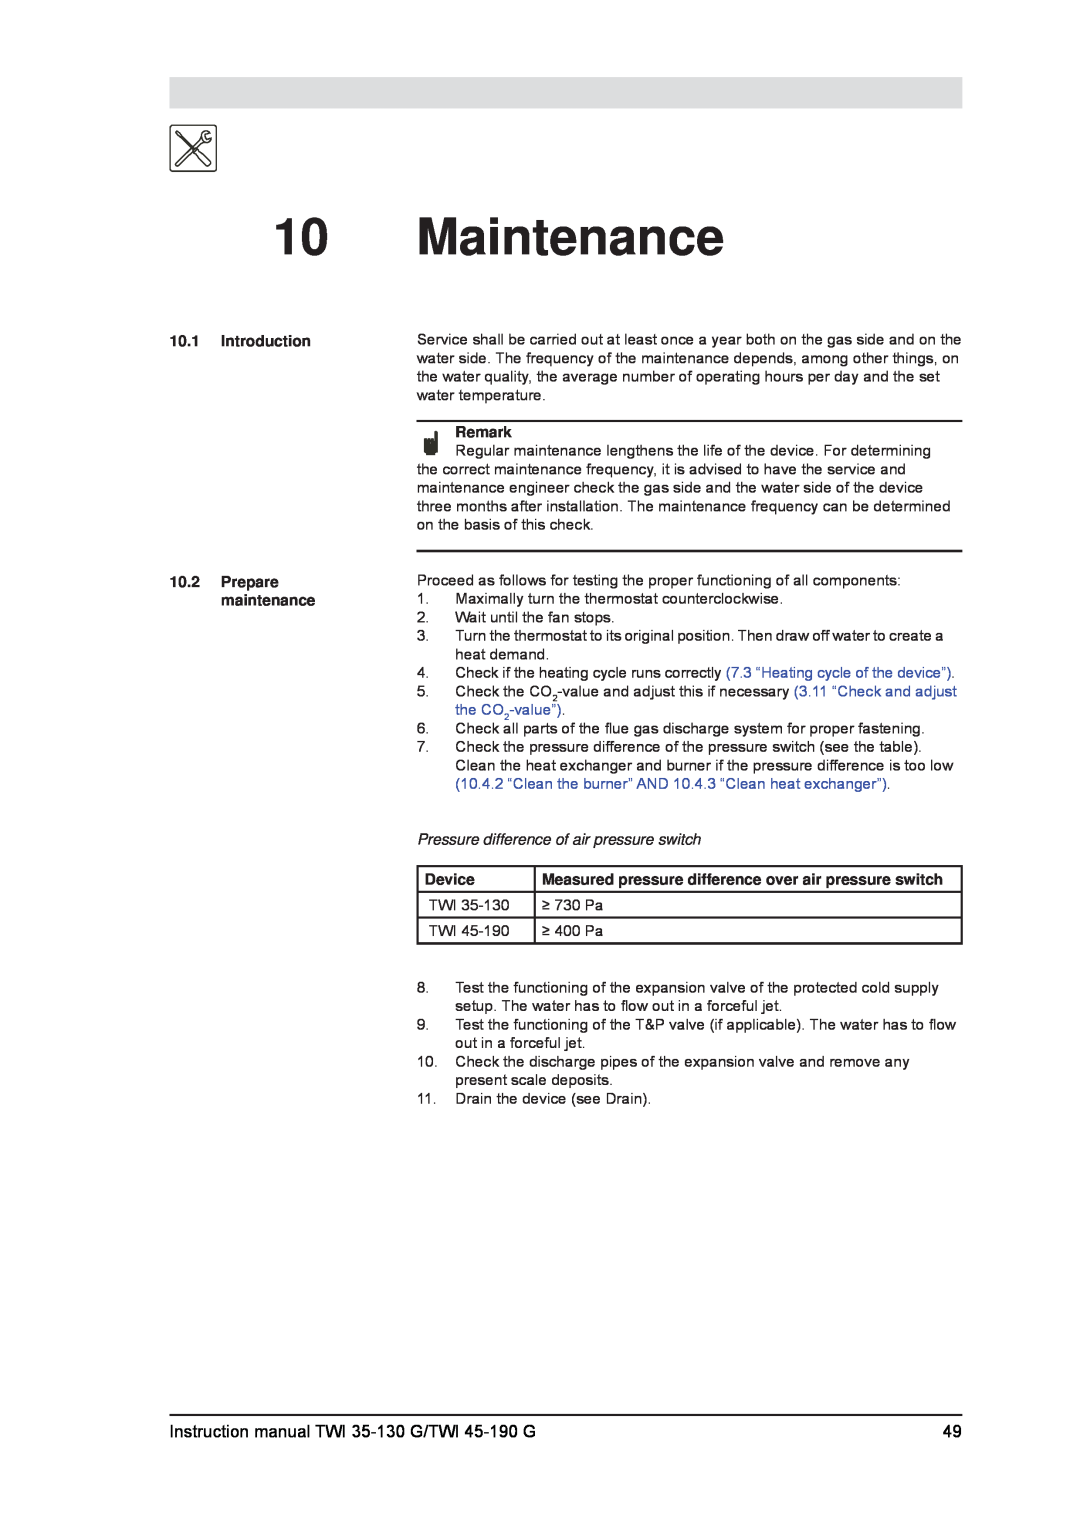 A.O. Smith Maintenance, Introduction 10.2 Prepare maintenance, Instruction manual TWI 35-130 G/TWI 45-190 G, Remark 